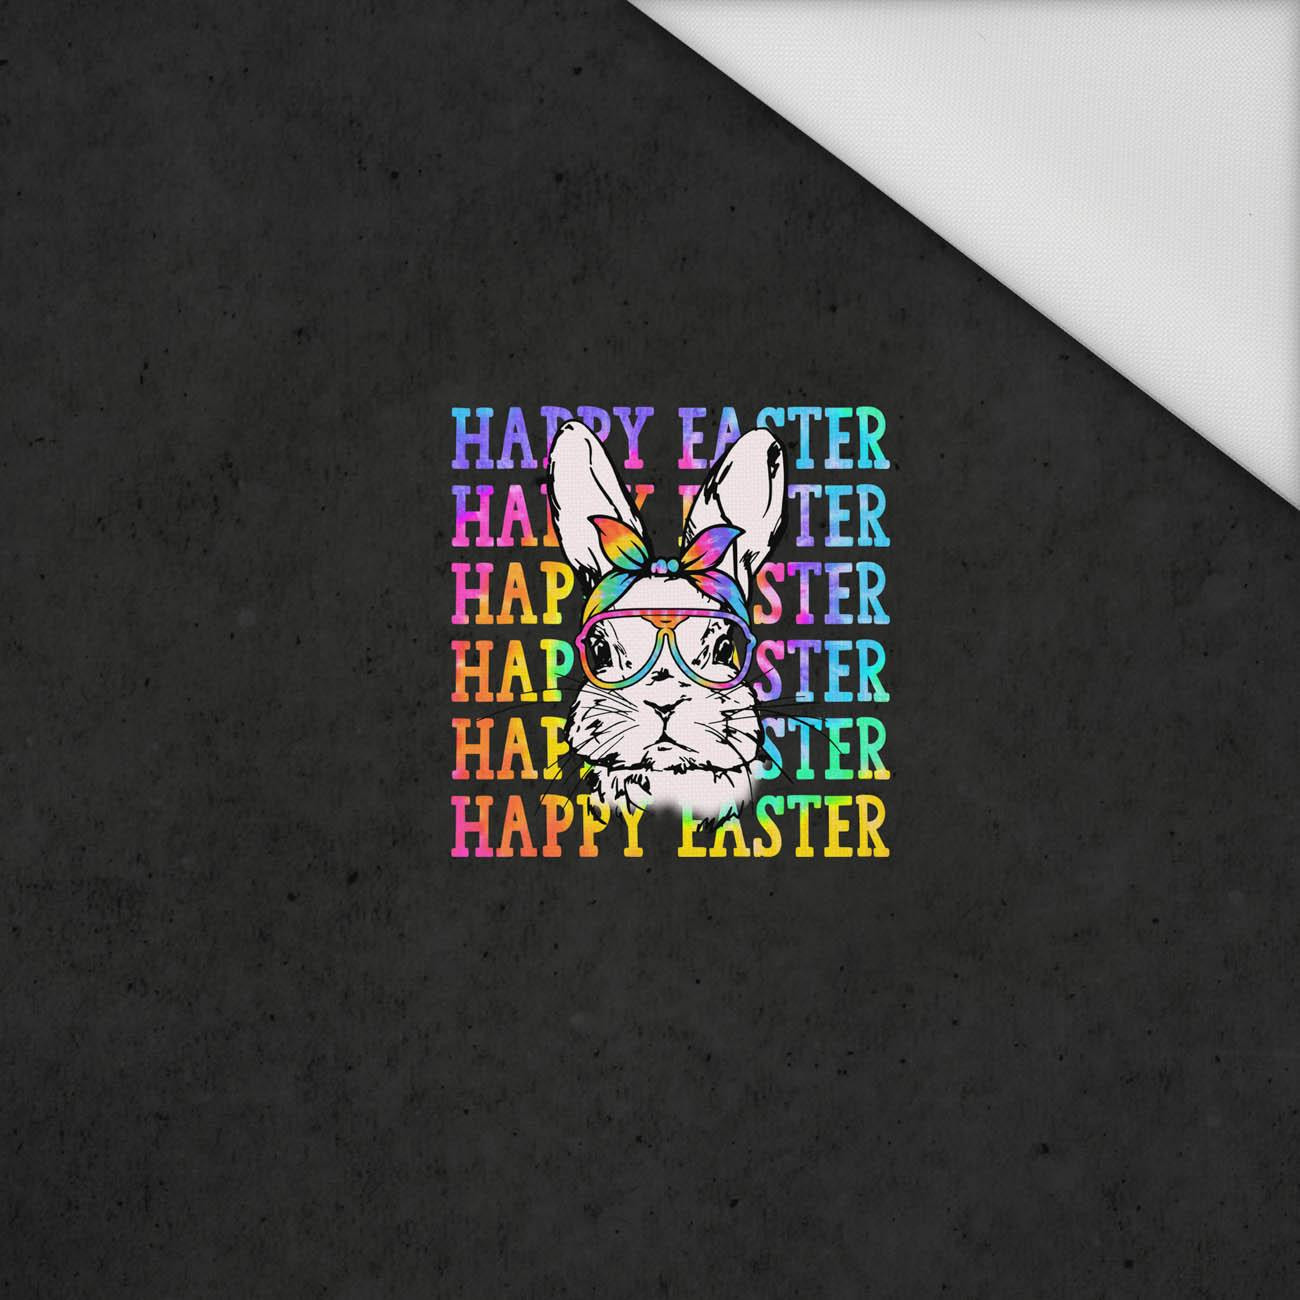 HAPPY EASTER / neon - Paneel (60cm x 50cm) Wasserabweisende Webware